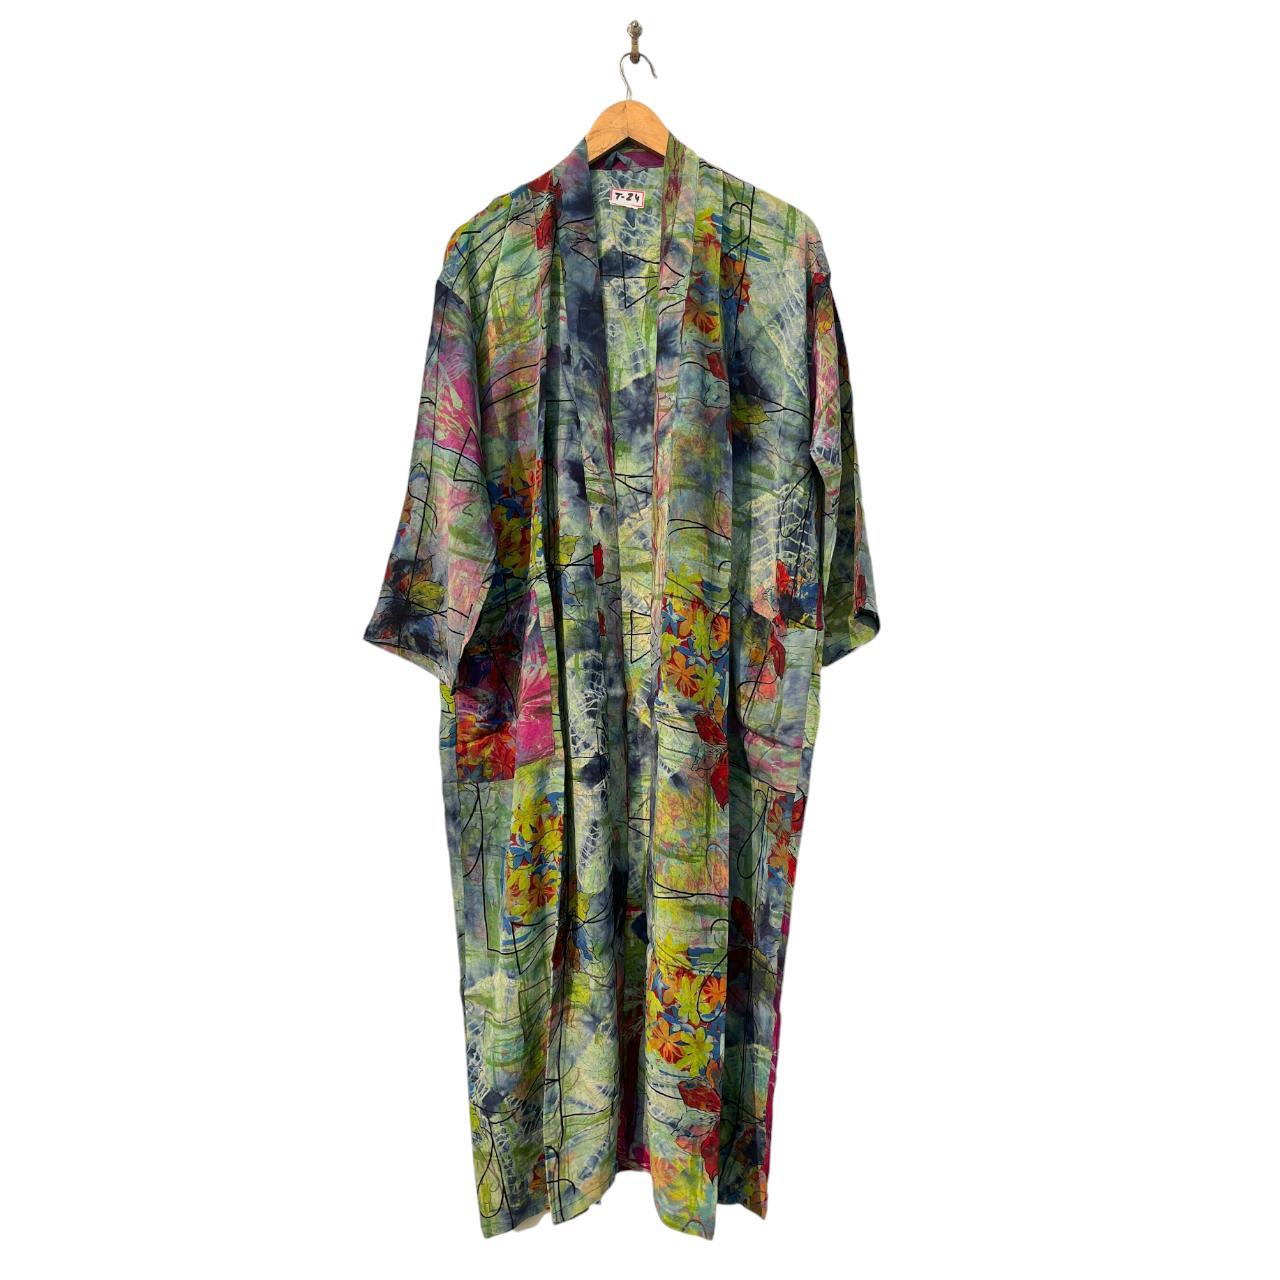 Silk Elegance: Handcrafted Kimono Robe for Ultimate... - Depop